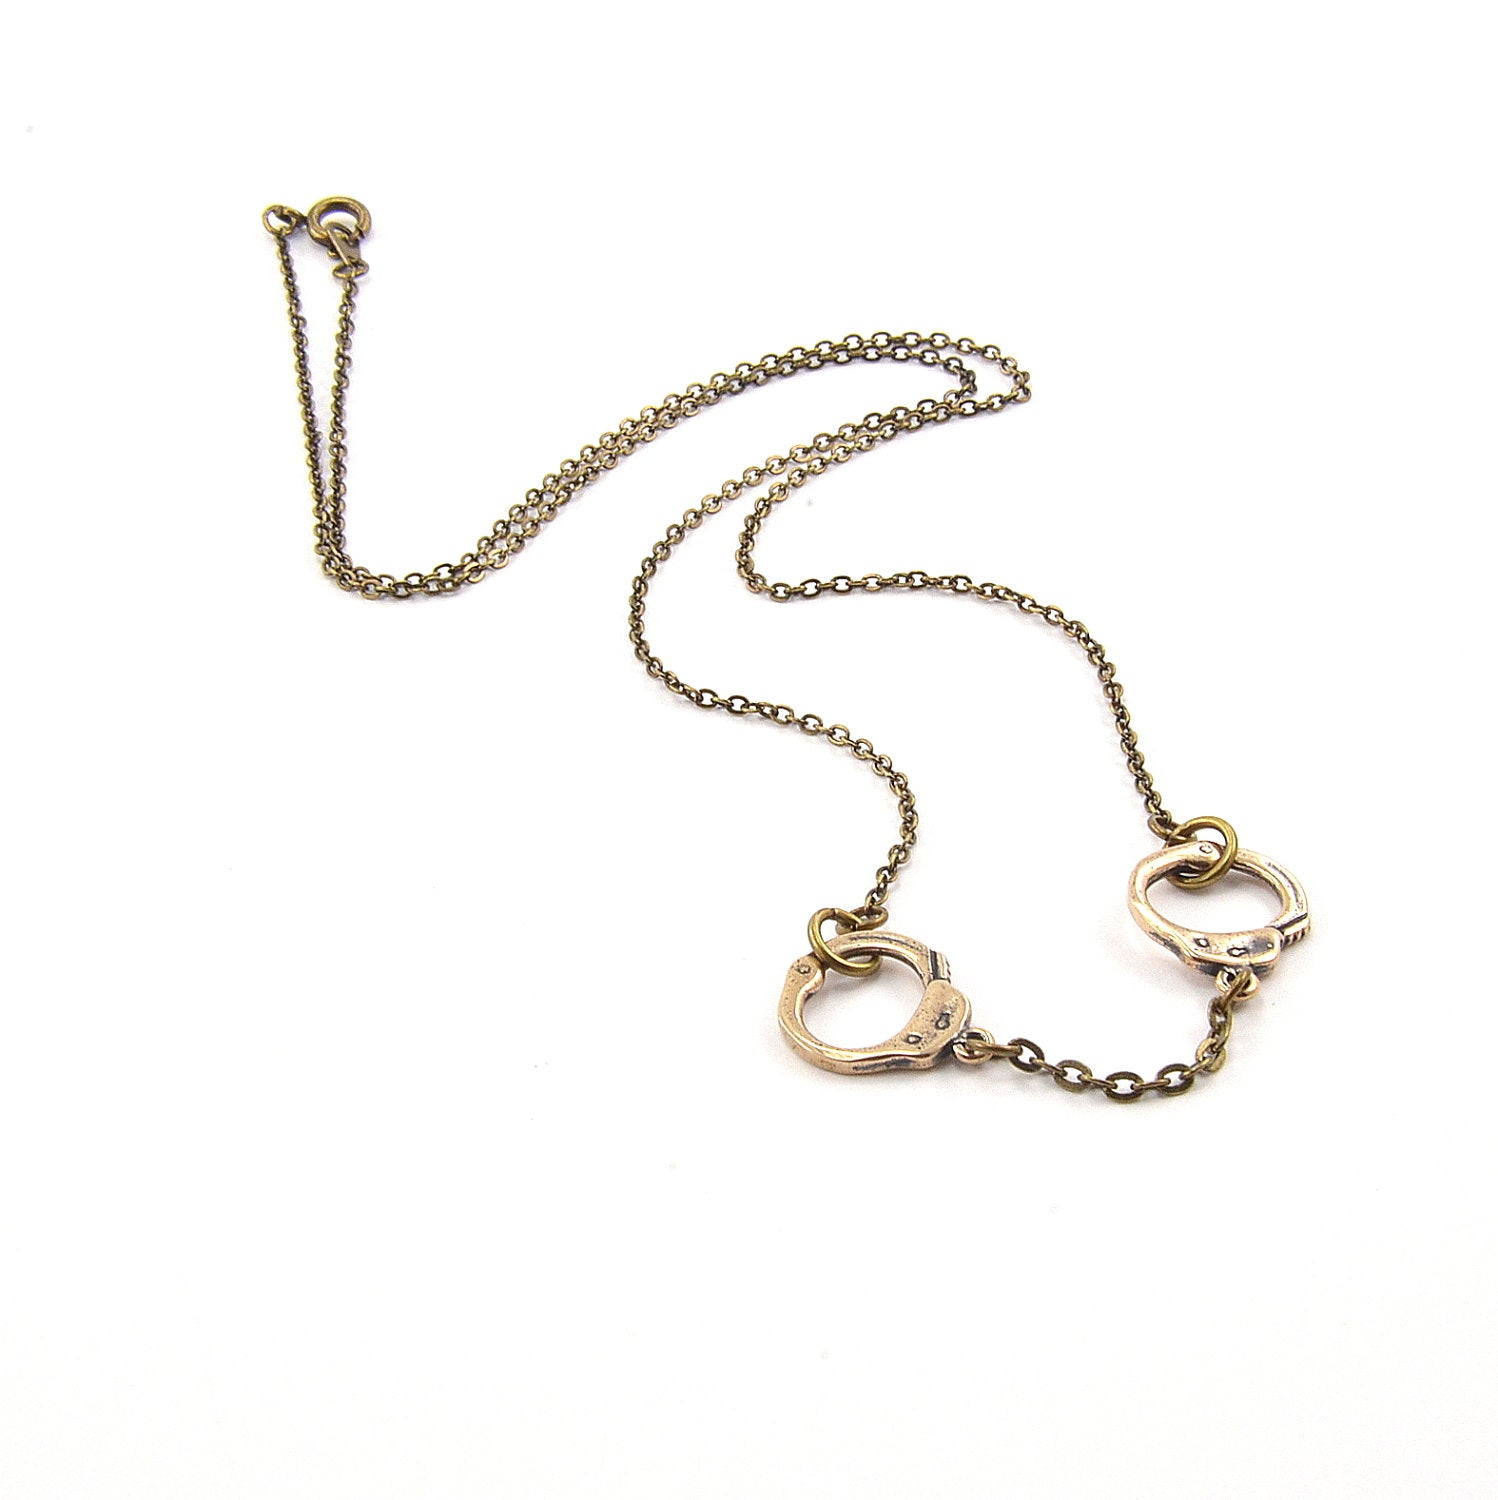 Handcuff Necklace - Gwen Delicious Jewelry Designs